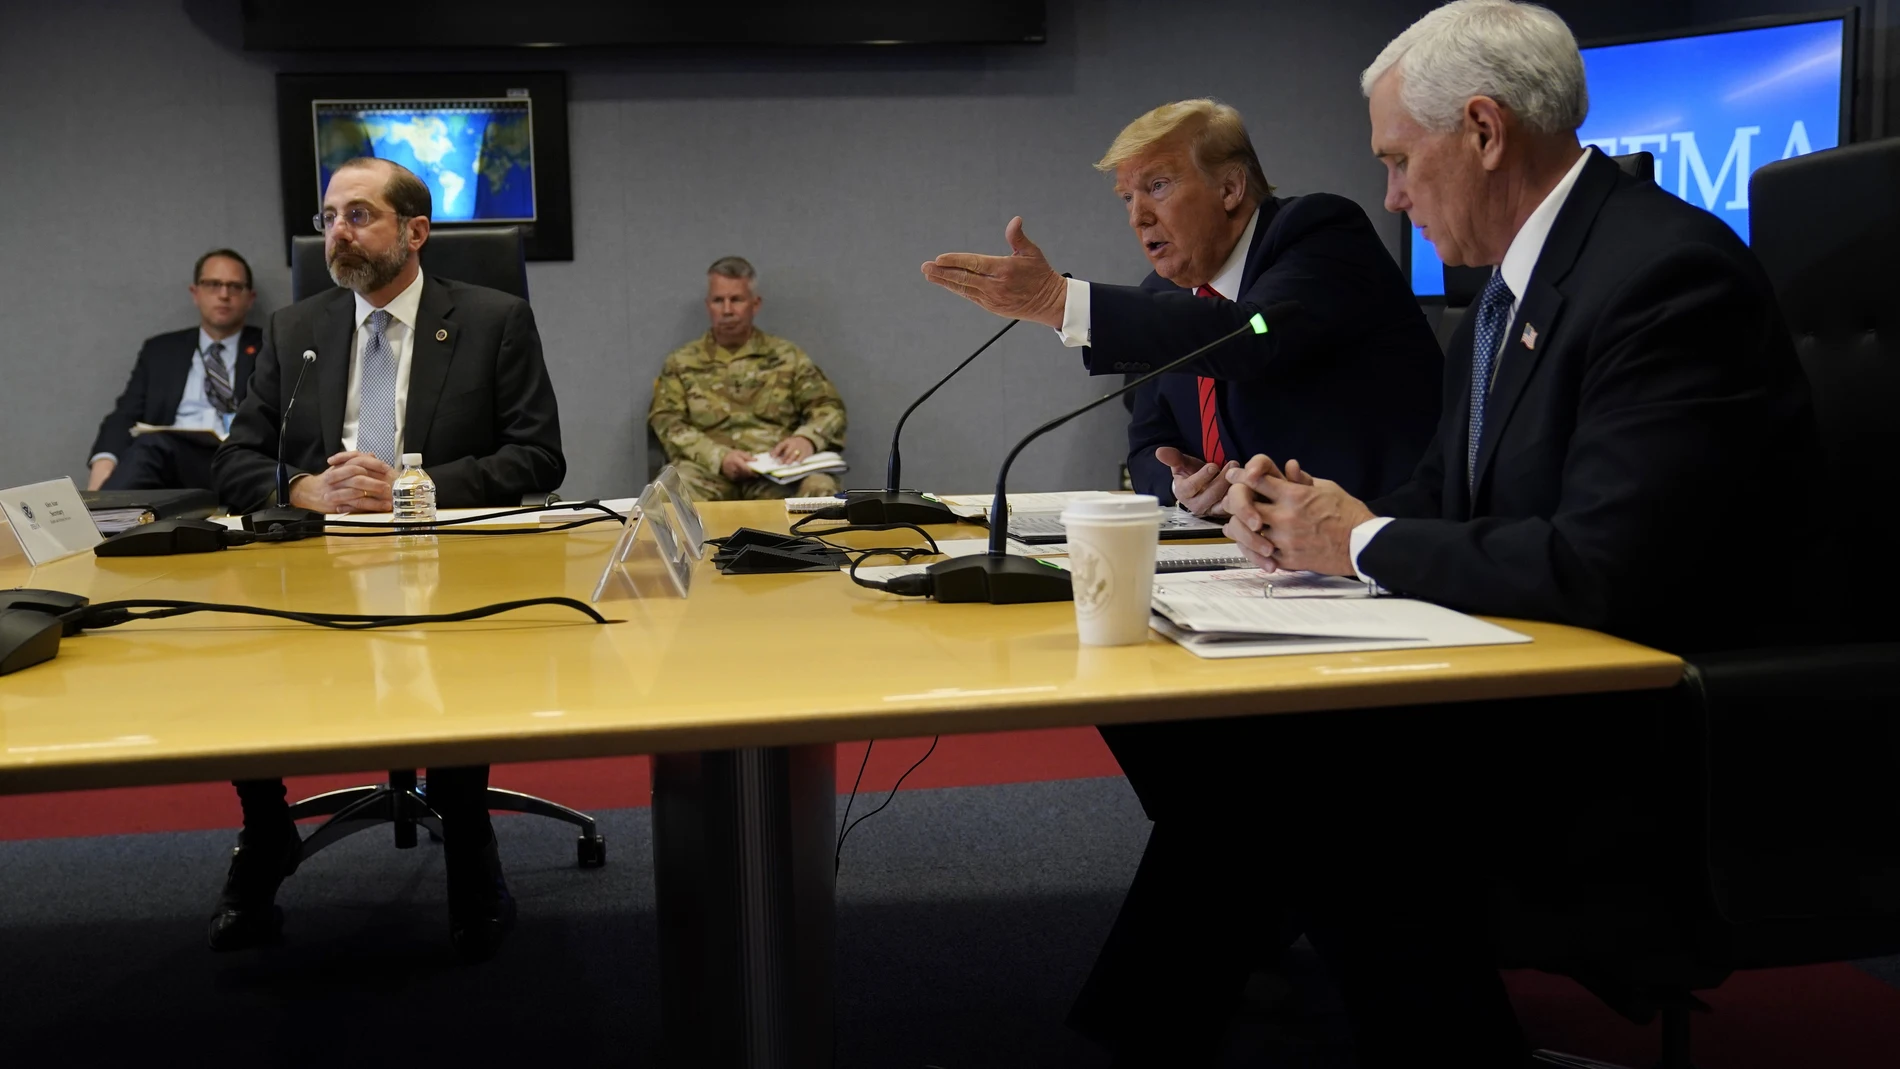 Trump and Pence visit FEMA headquarters